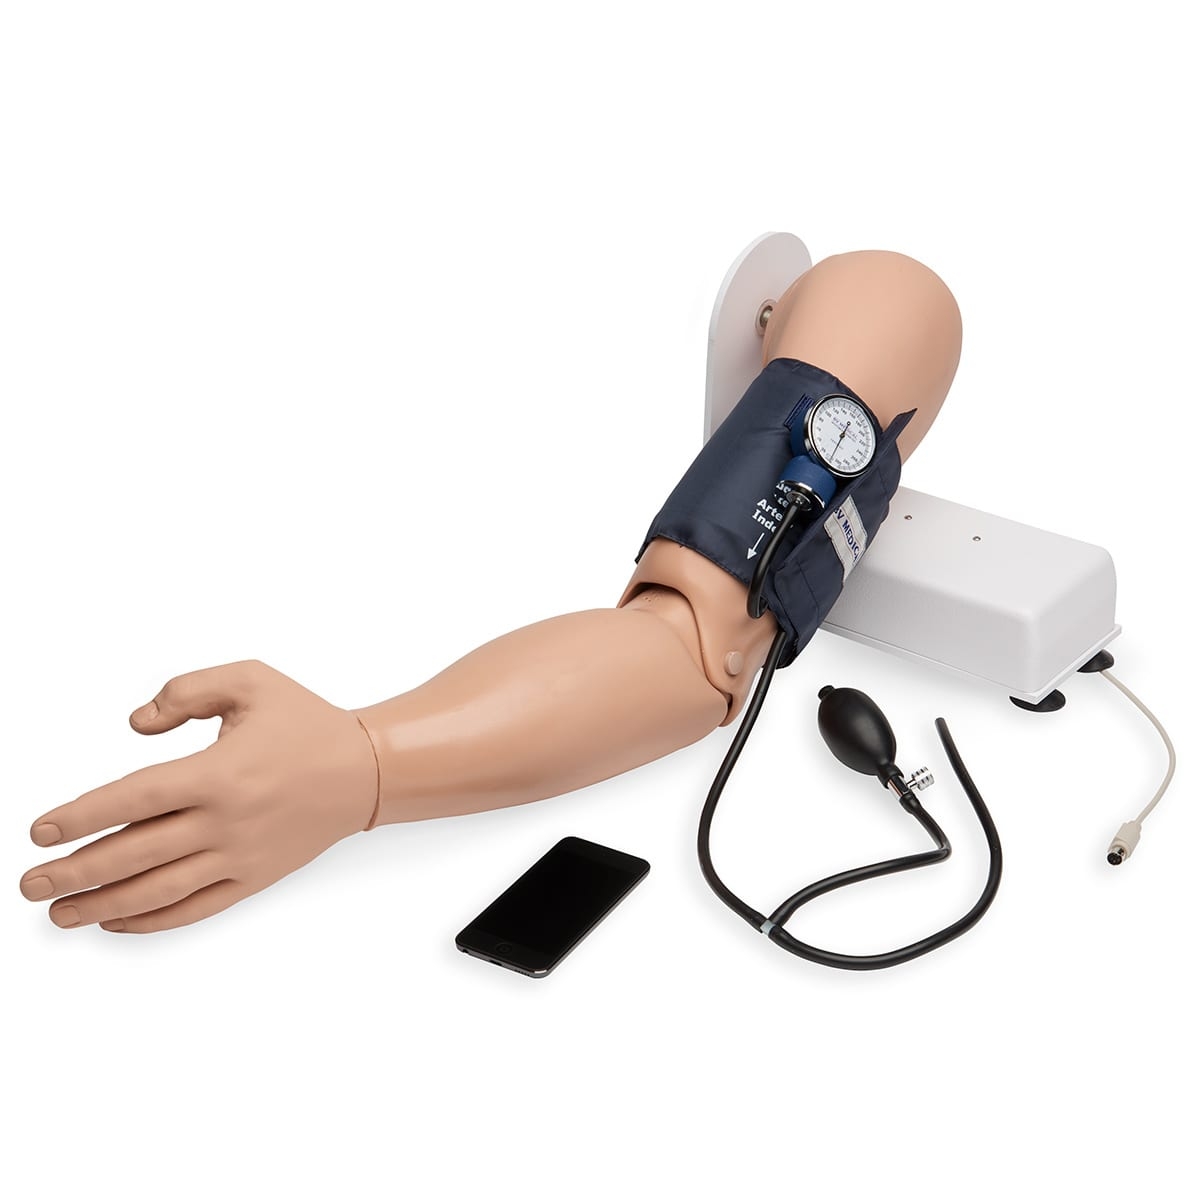 Simulaids Blood Pressure Simulator with iPod – Blood Pressure Simulators – Medical Teaching Equipment